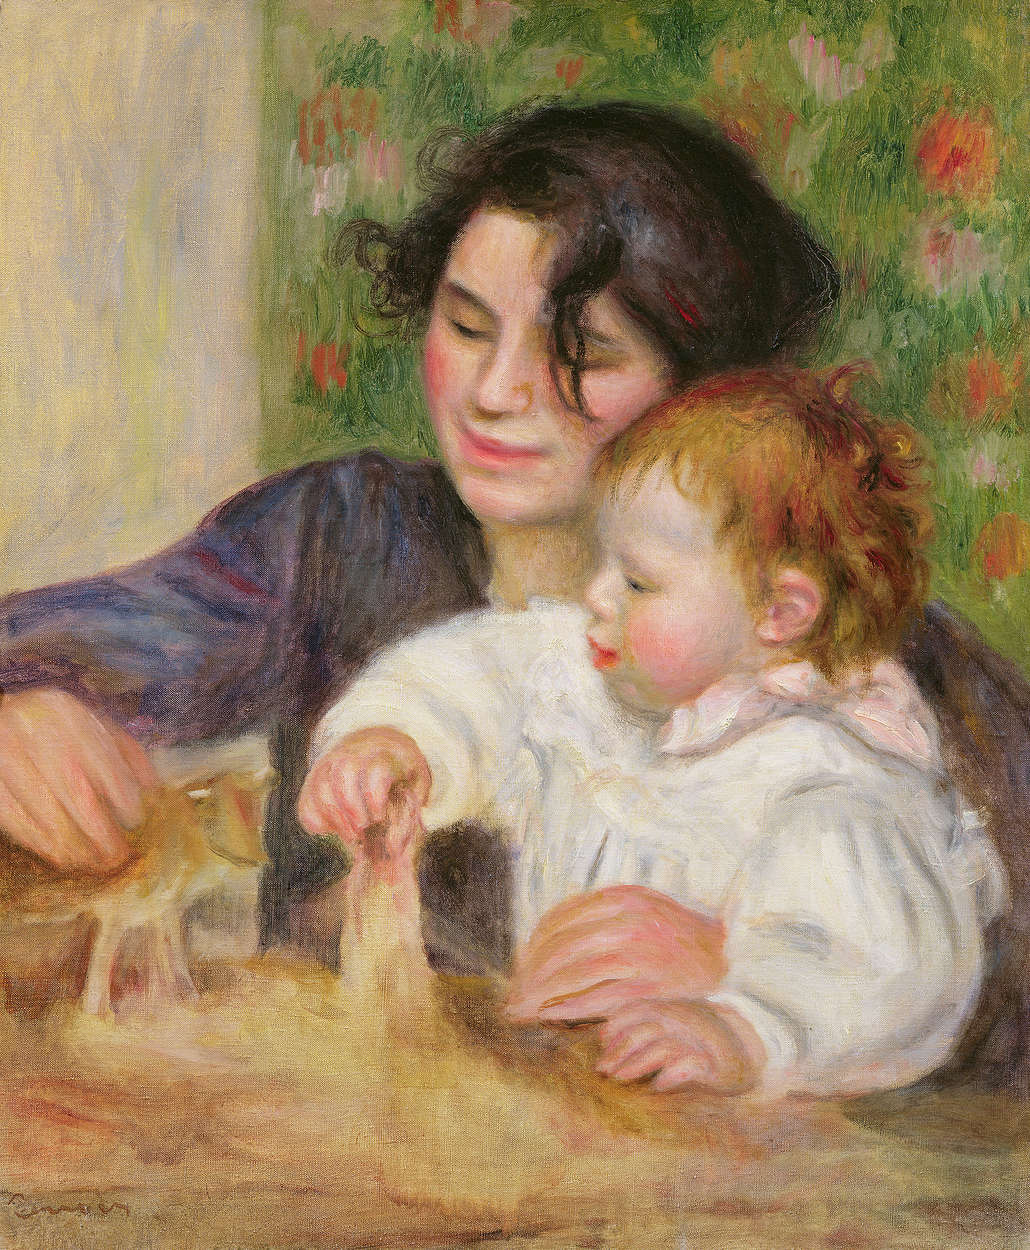             Muurschildering "Gabrielle en Jean" van Pierre Auguste Renoir
        